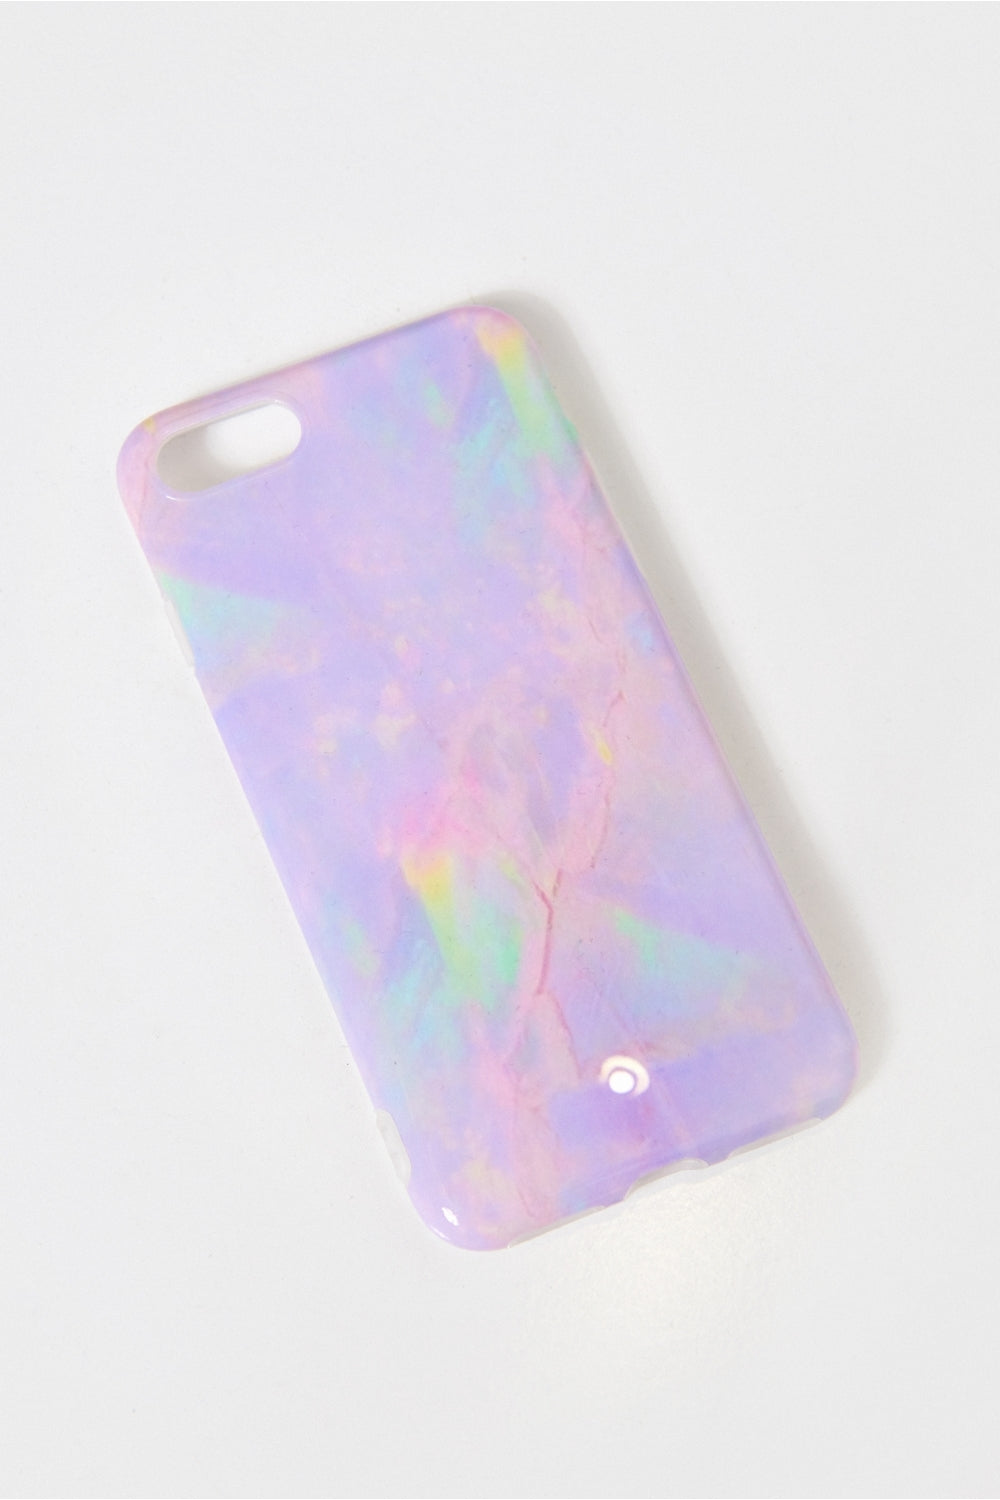 Tie Dye Marble Phone Case iPhone 8